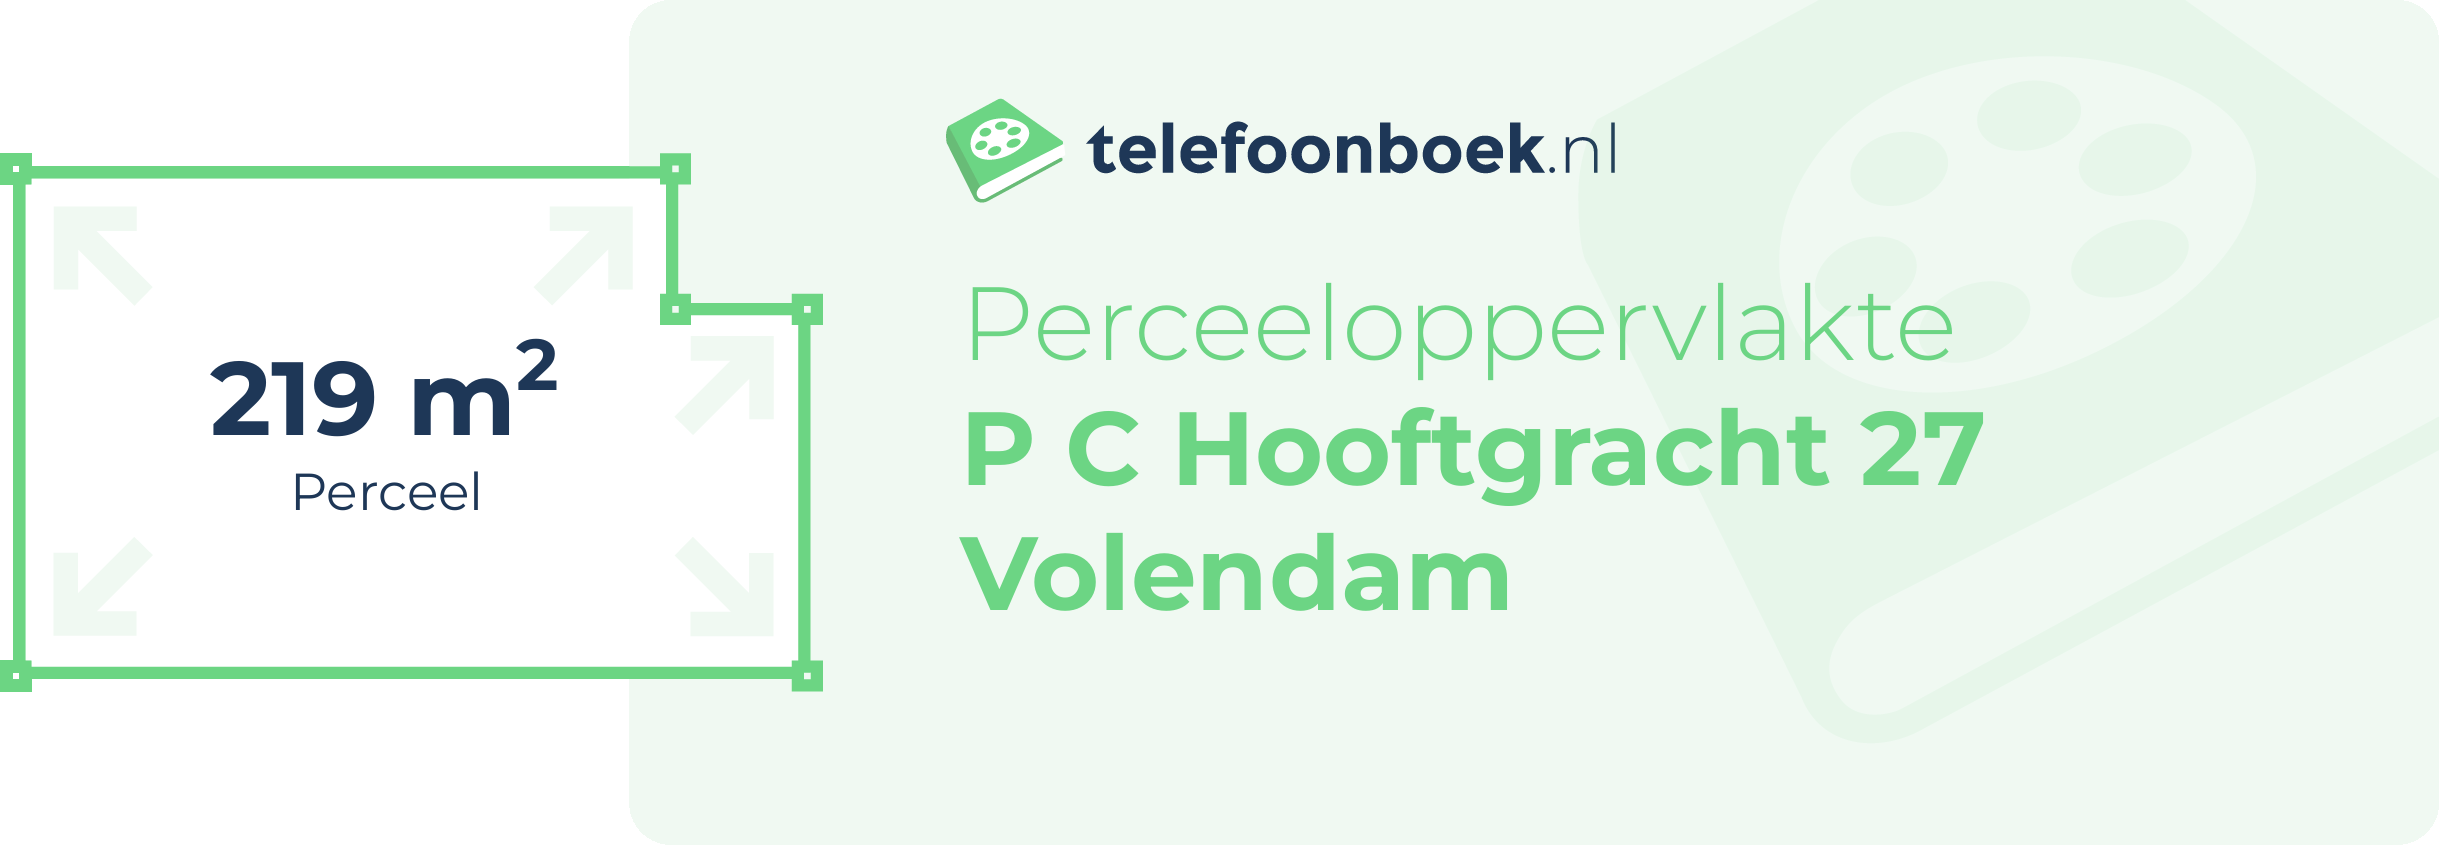 Perceeloppervlakte P C Hooftgracht 27 Volendam